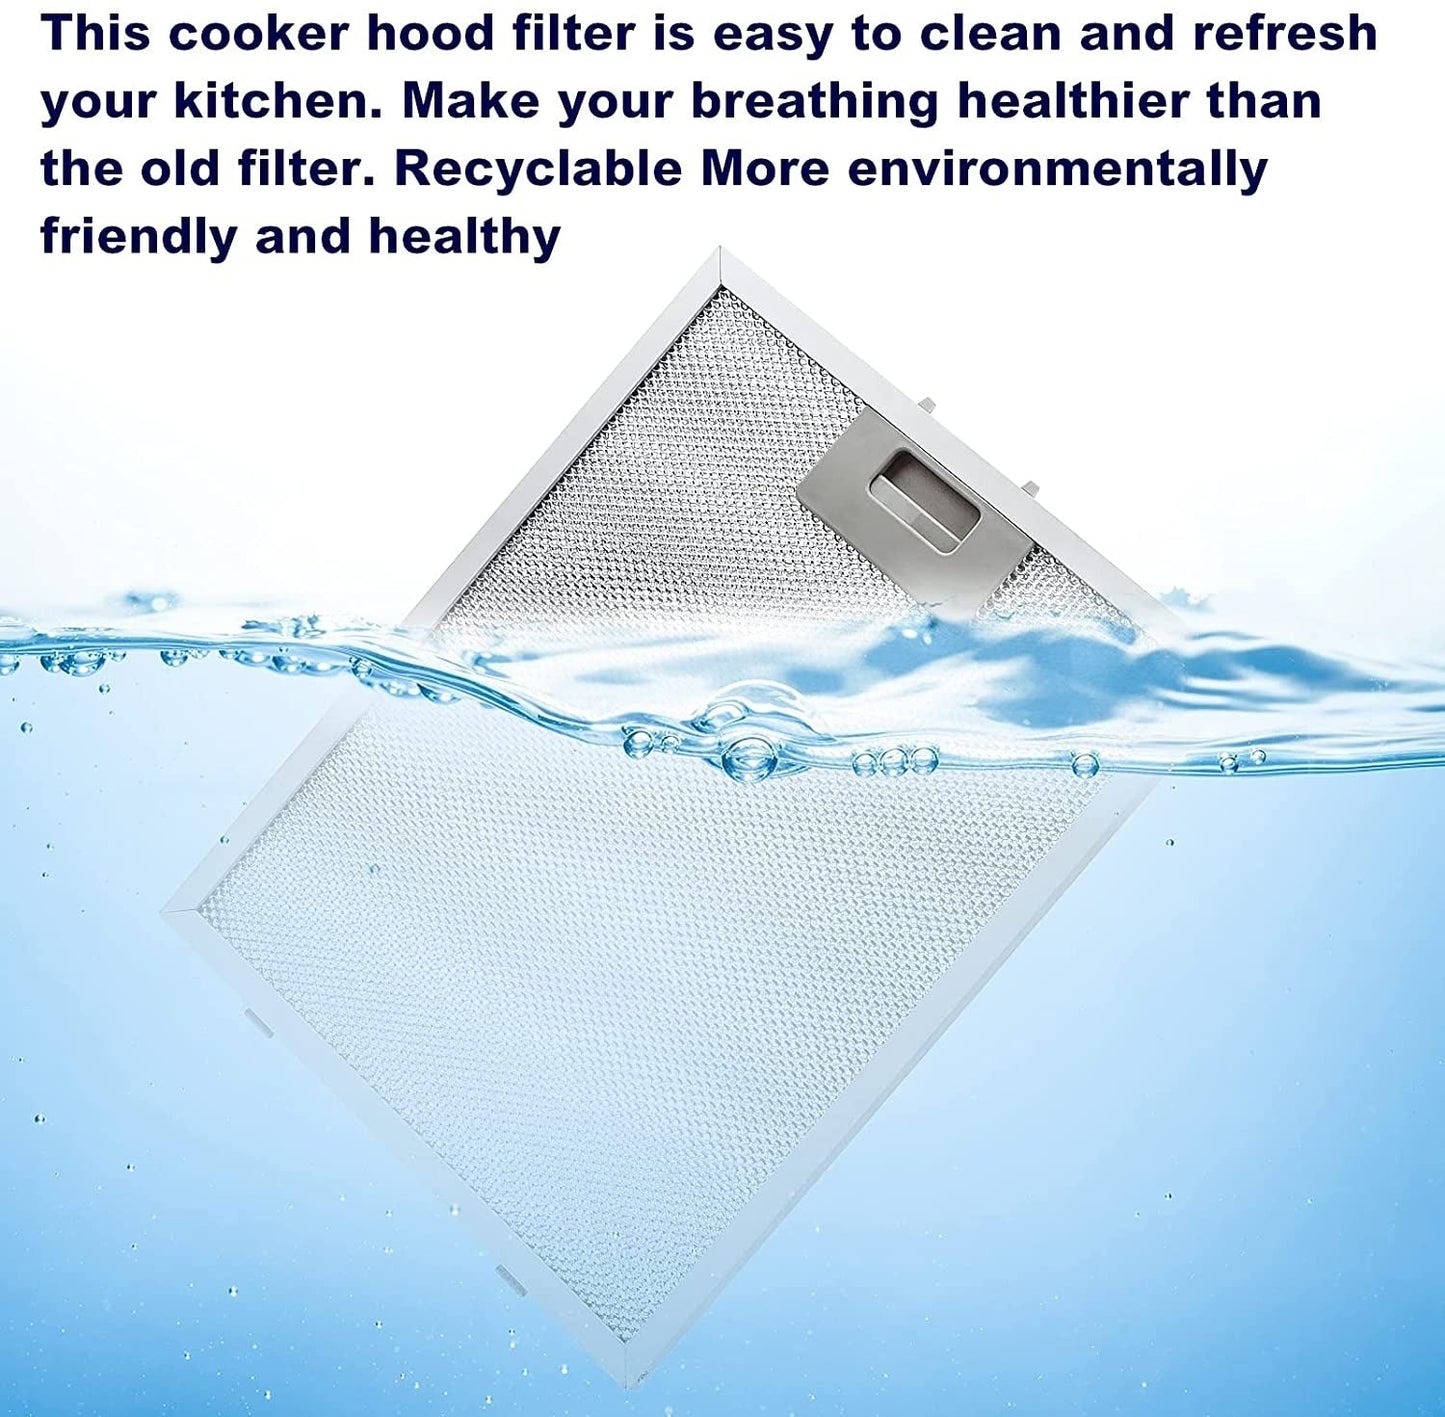 00449421 Filter For Hood 268x218 mm Hood Oil Filter Extractor Aspirator Grease Filter Kitchen Hood 26.8x21.8 cm 00704113